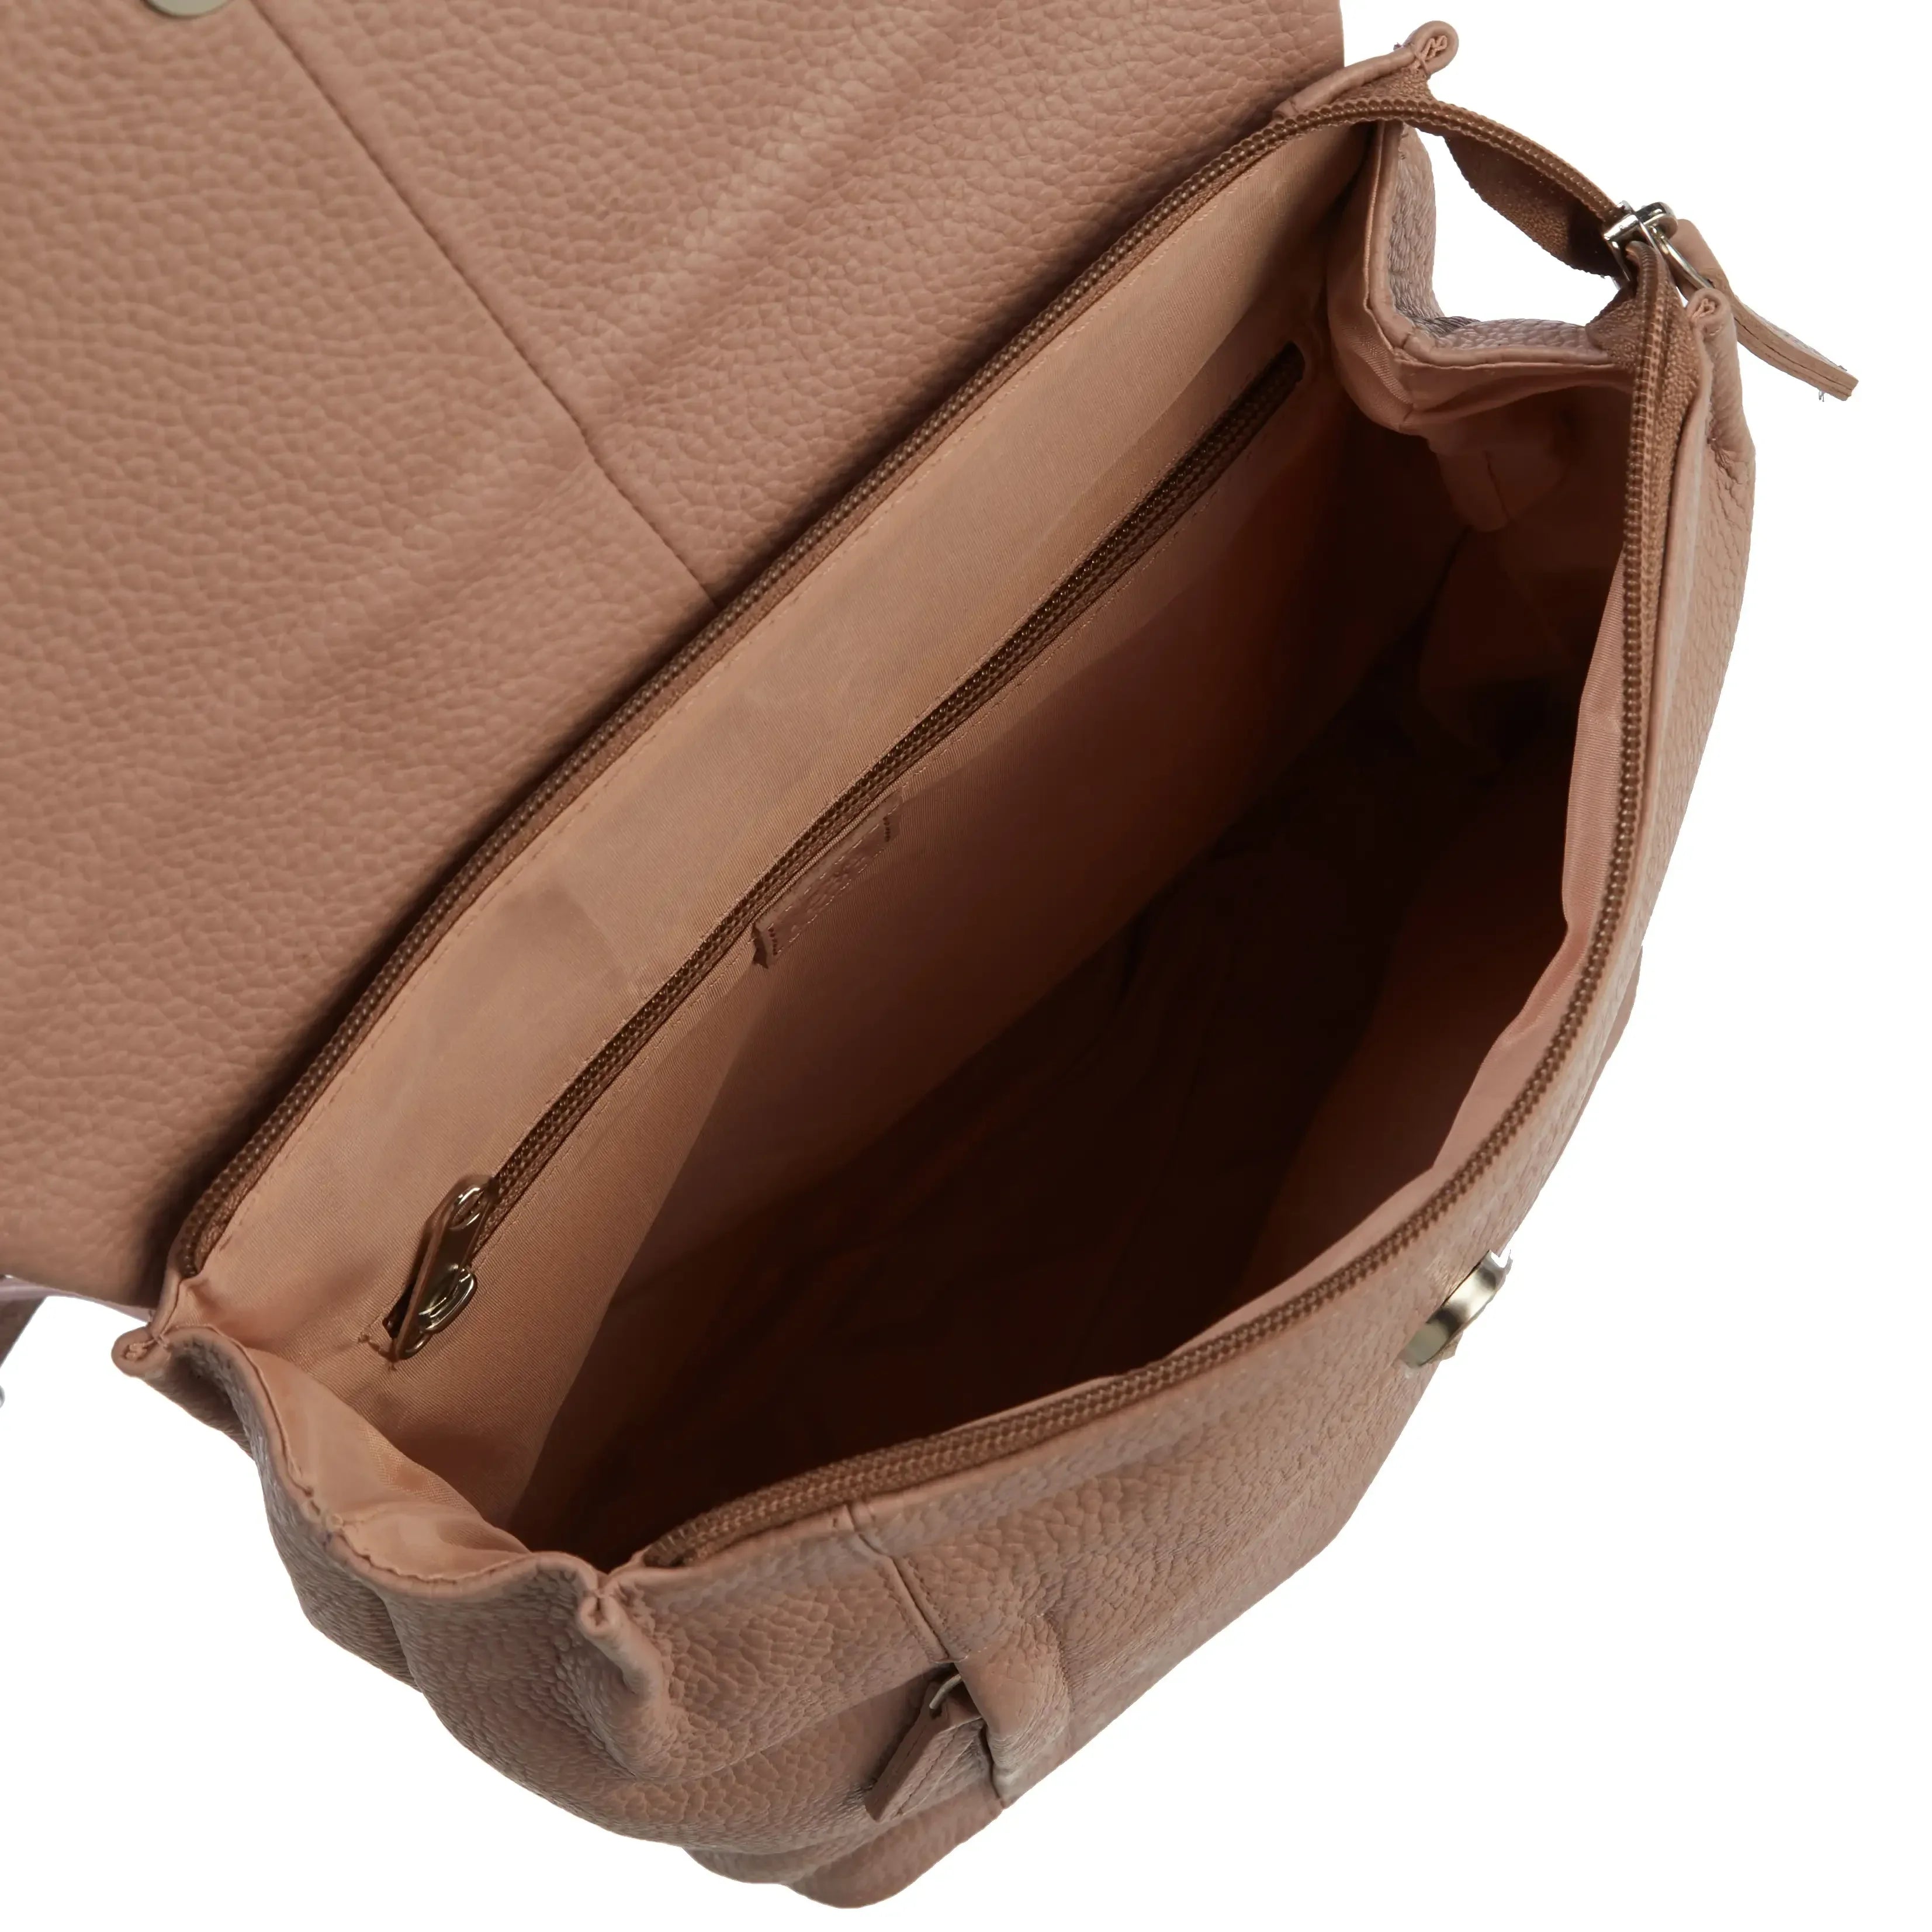 koffer-direkt.de Prato city backpack 33 cm - light beige